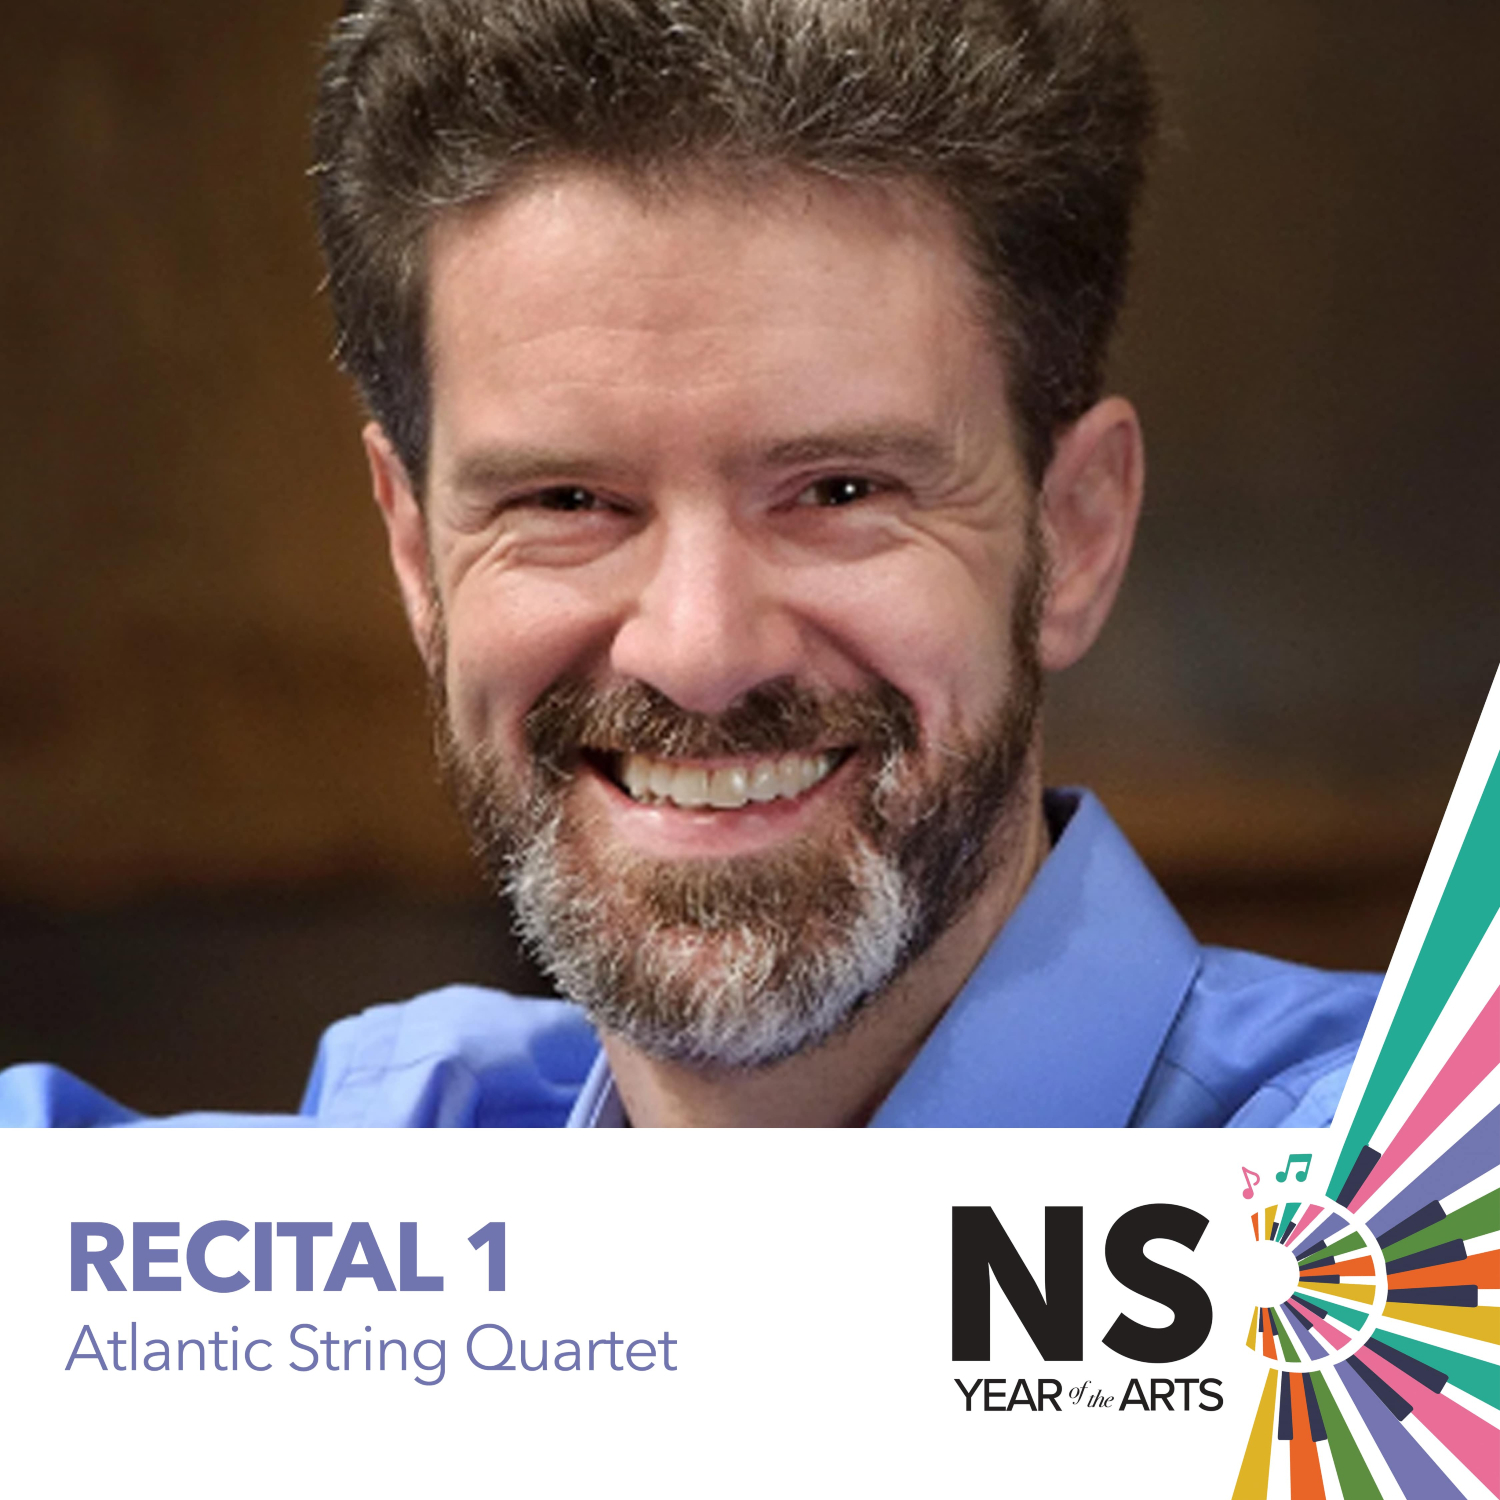 Recital 1 – Atlantic String Quartet